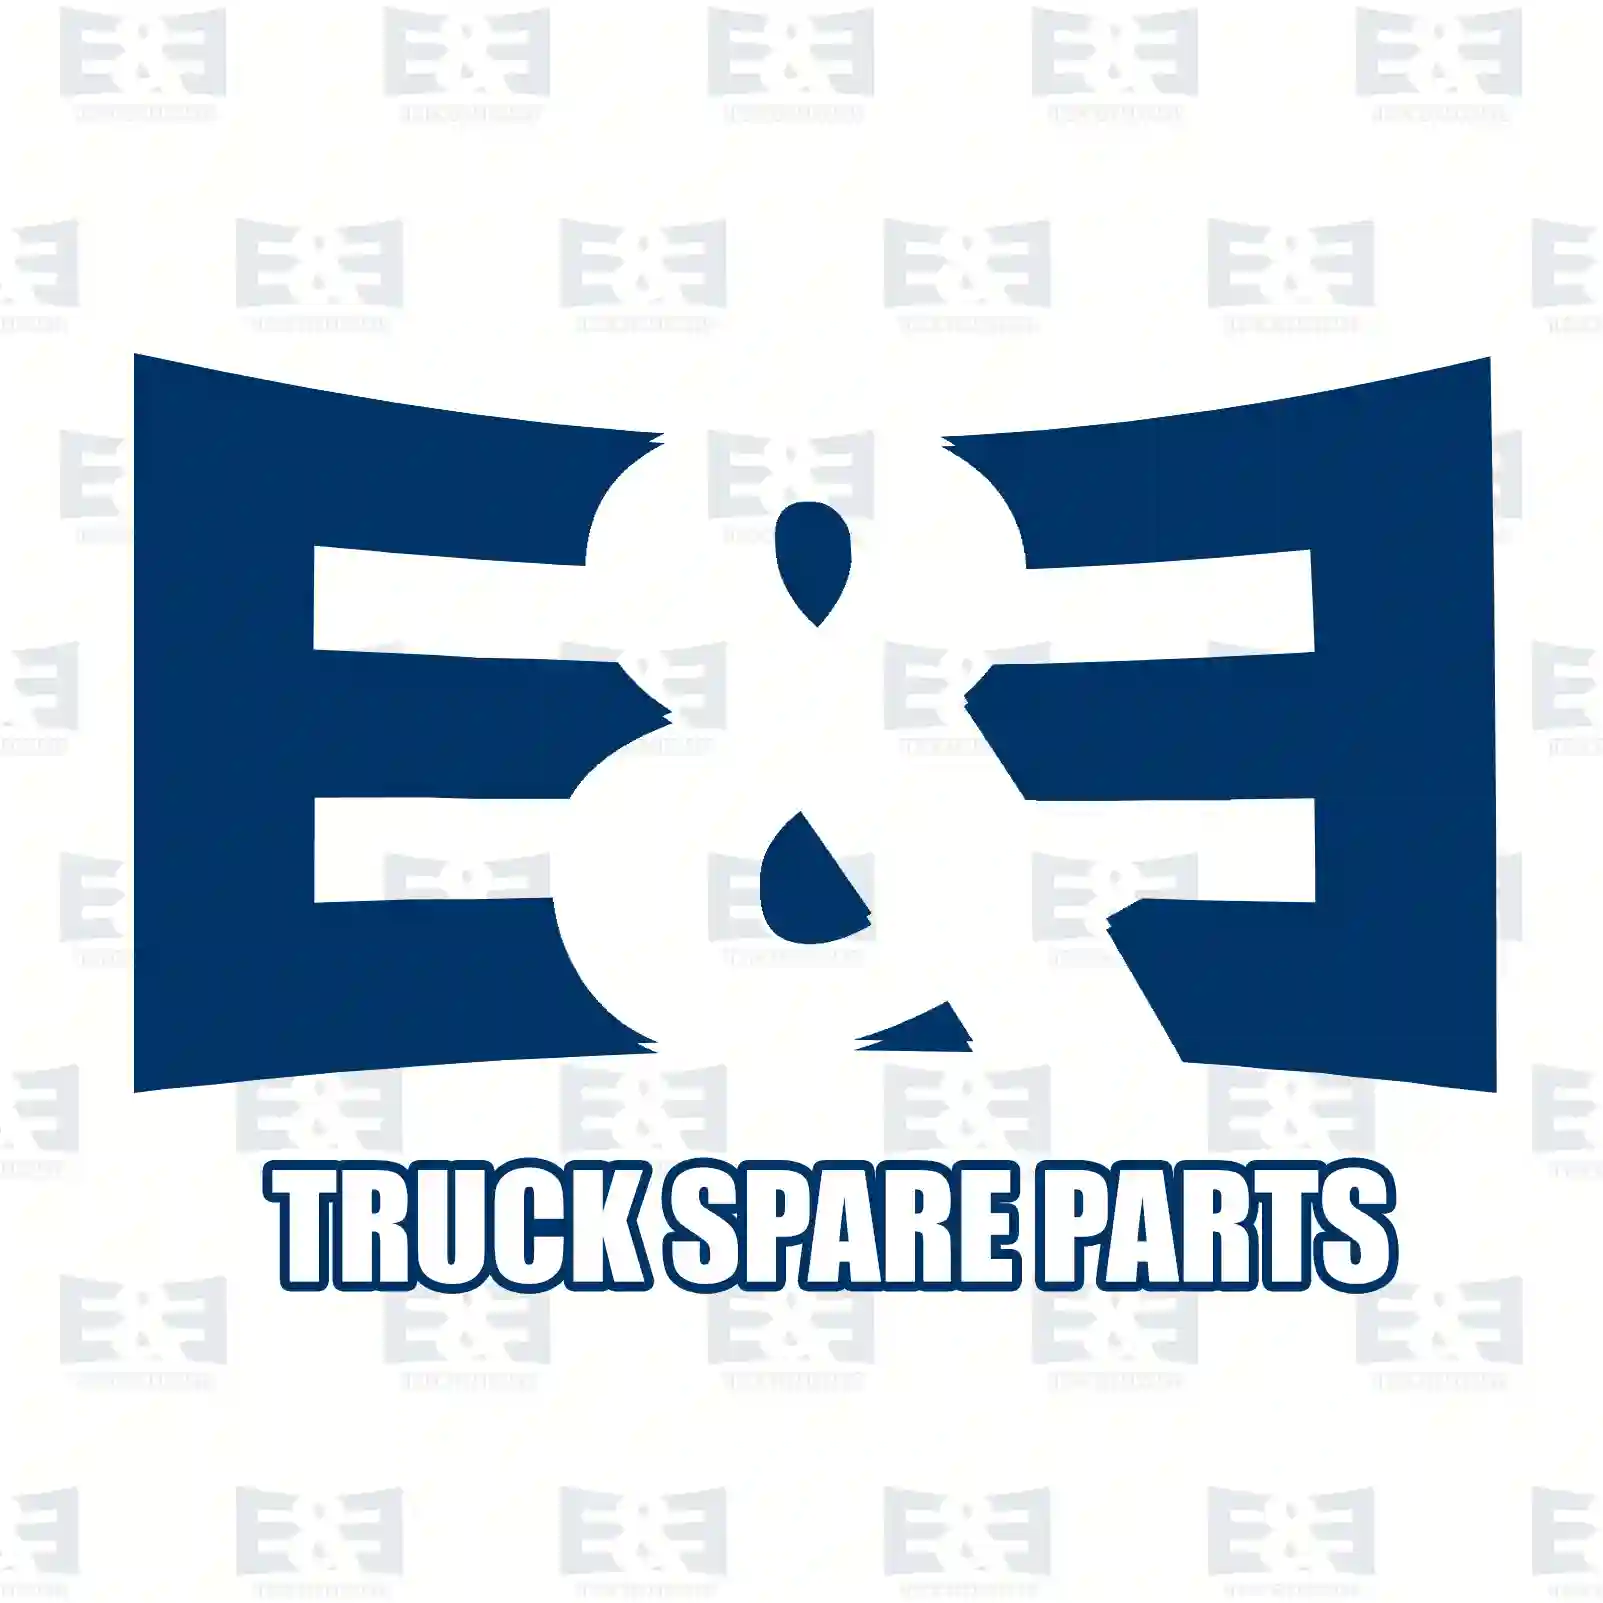 V-belt kit, 2E2203866, 0278044, 1249561, 1278389, 1289200, 248044, 278044, 602879, 607547, 751360, 06580432246, 06580722462, 06580732462, 0069974892, 0079970192, 4766777102 ||  2E2203866 E&E Truck Spare Parts | Truck Spare Parts, Auotomotive Spare Parts V-belt kit, 2E2203866, 0278044, 1249561, 1278389, 1289200, 248044, 278044, 602879, 607547, 751360, 06580432246, 06580722462, 06580732462, 0069974892, 0079970192, 4766777102 ||  2E2203866 E&E Truck Spare Parts | Truck Spare Parts, Auotomotive Spare Parts